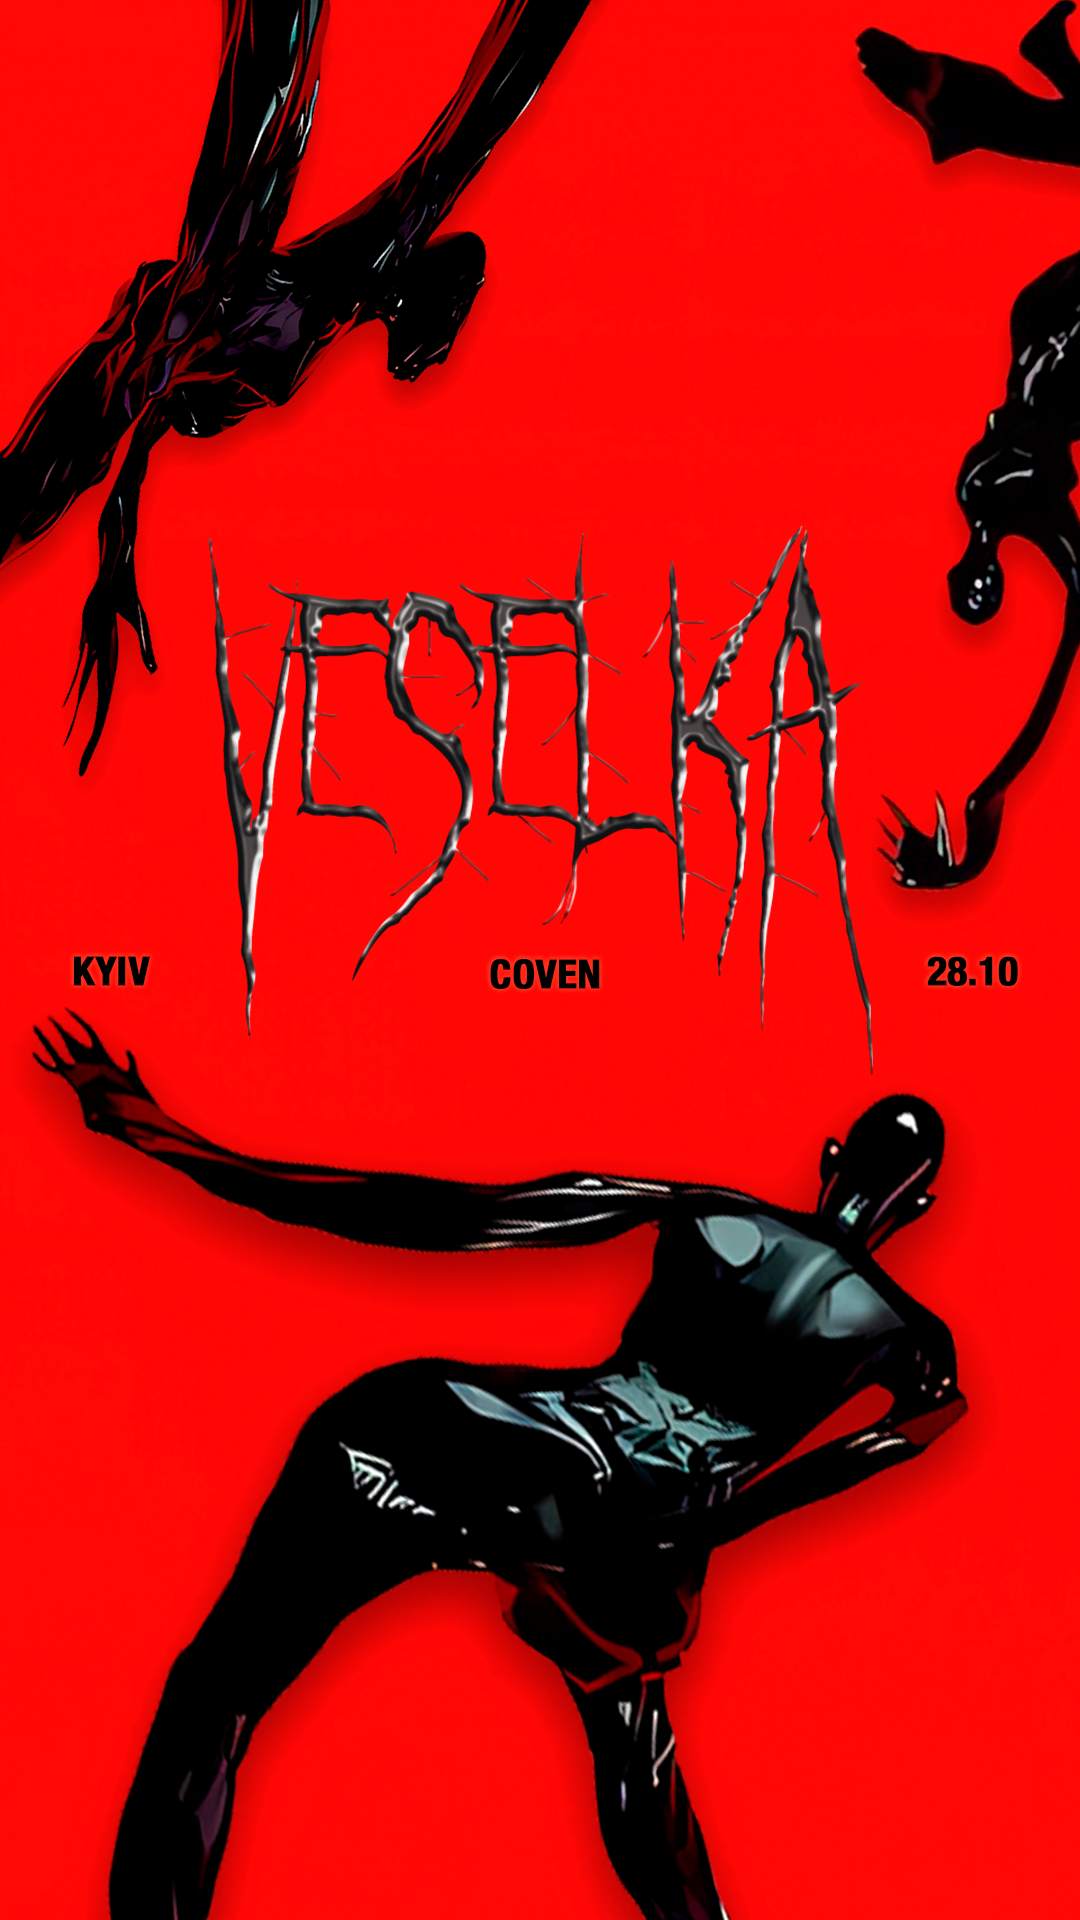 Veselka: COVEN - フライヤー表